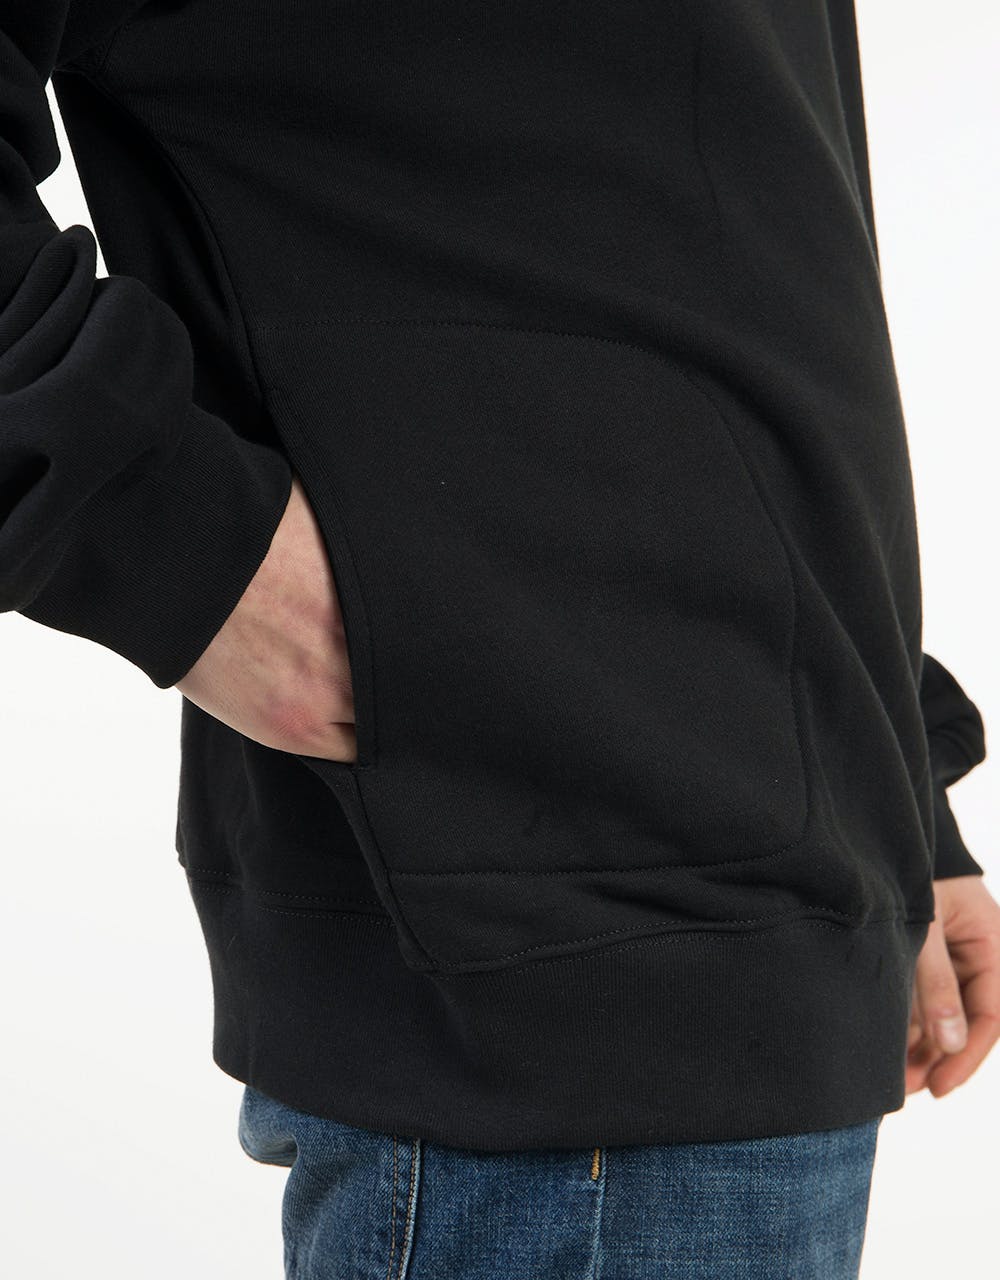 Stüssy Mock Neck Half Zip Sweatshirt - Black